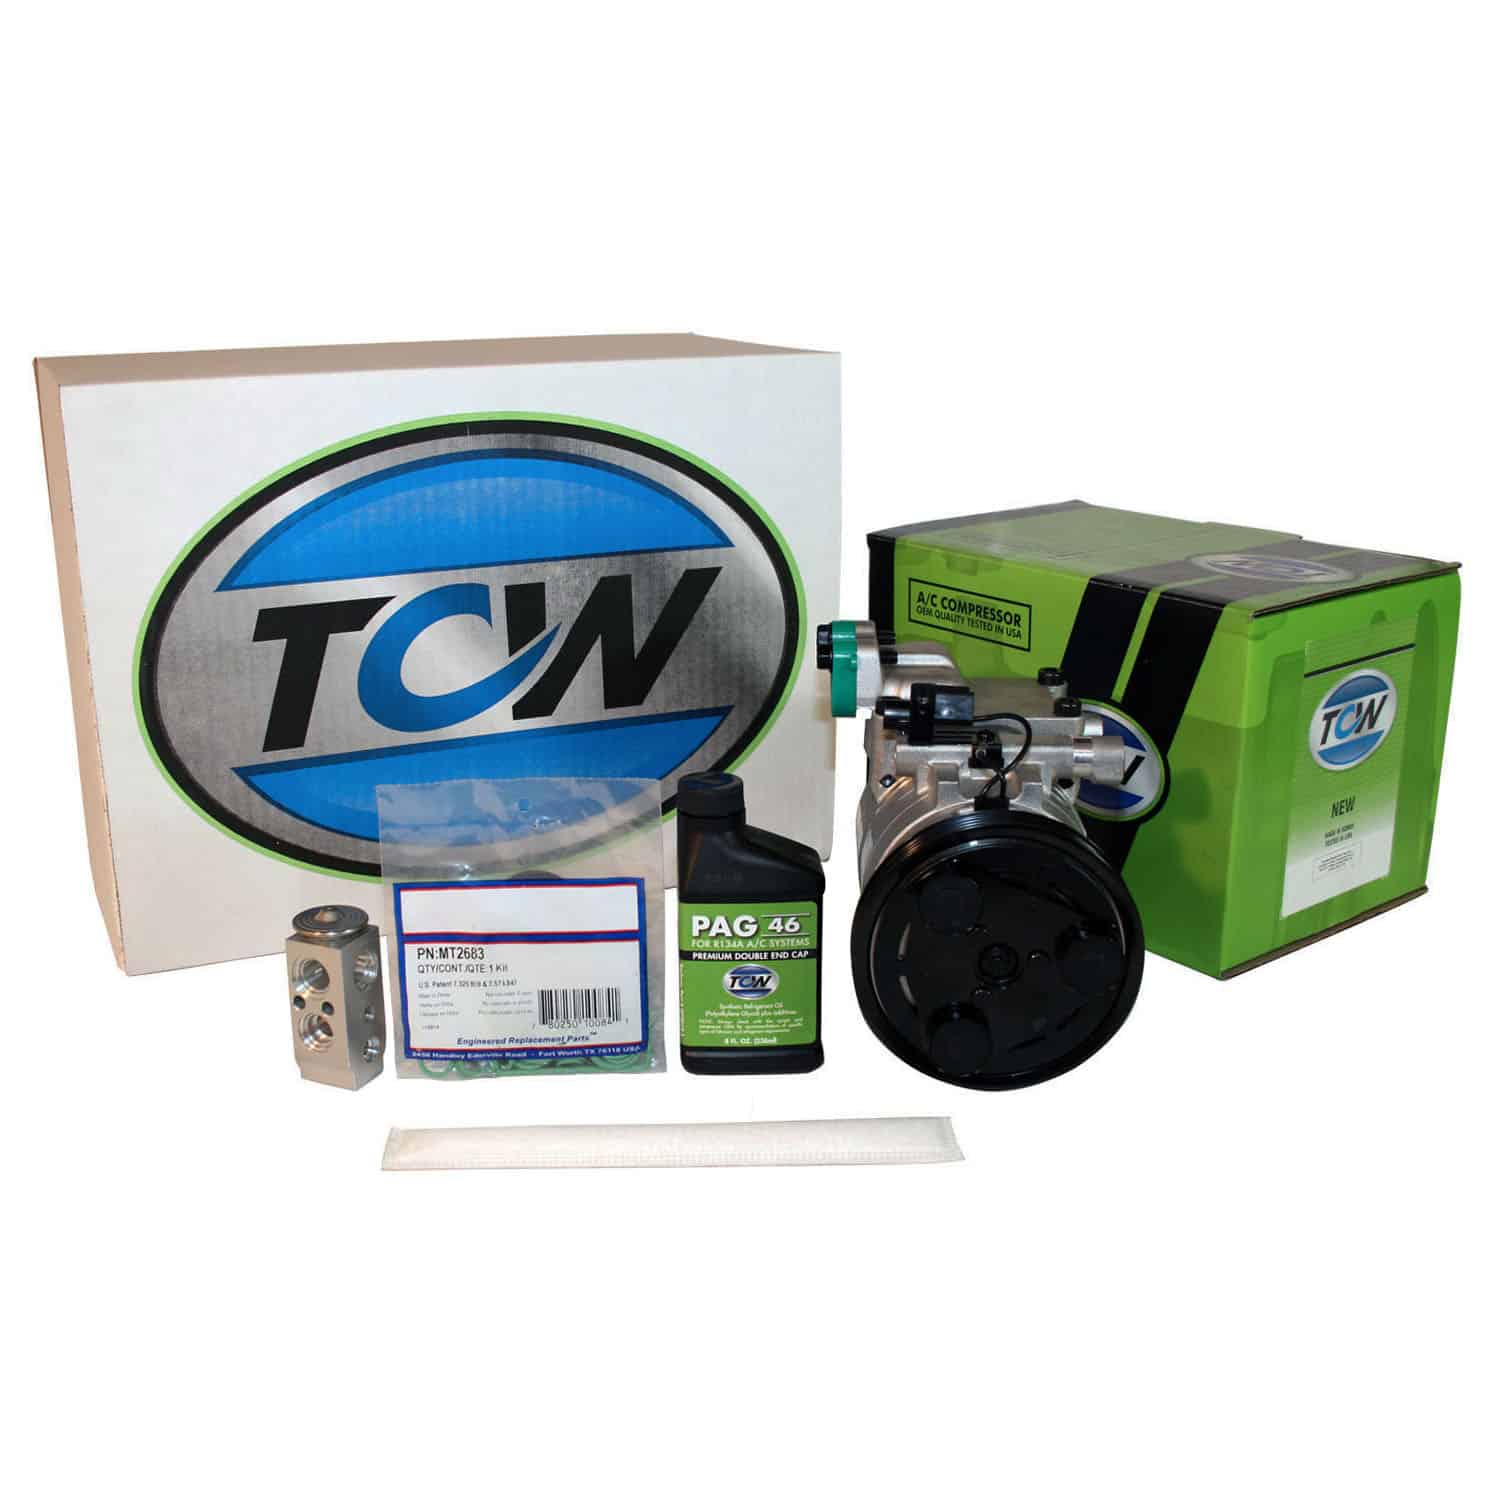 TCW Vehicle A/C Kit K1000457N New Product Image field_60b6a13a6e67c